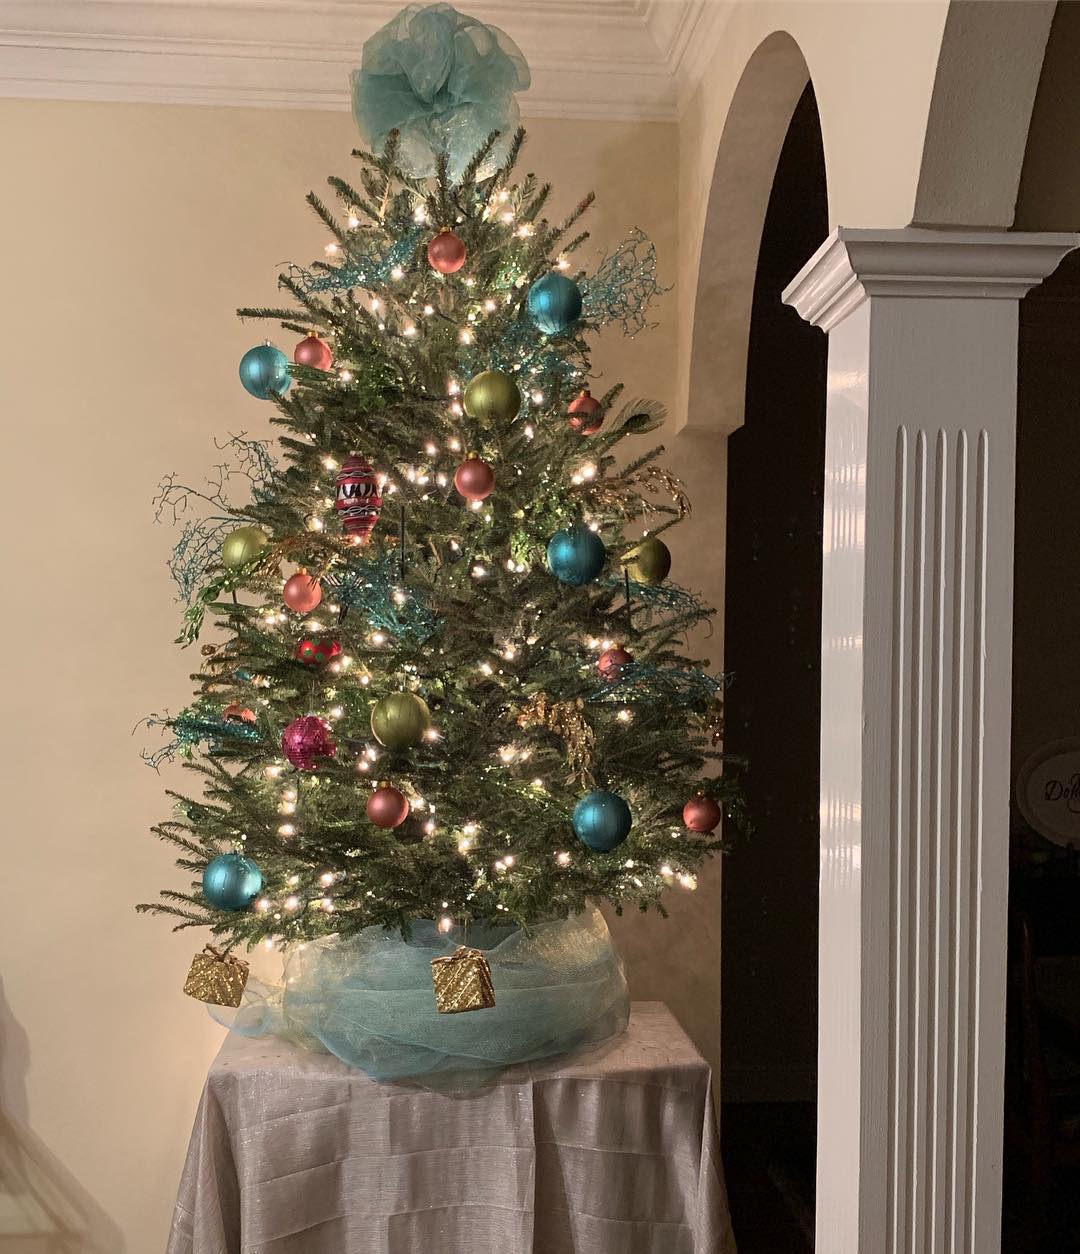 It’s beautiful table top Christmas tree!